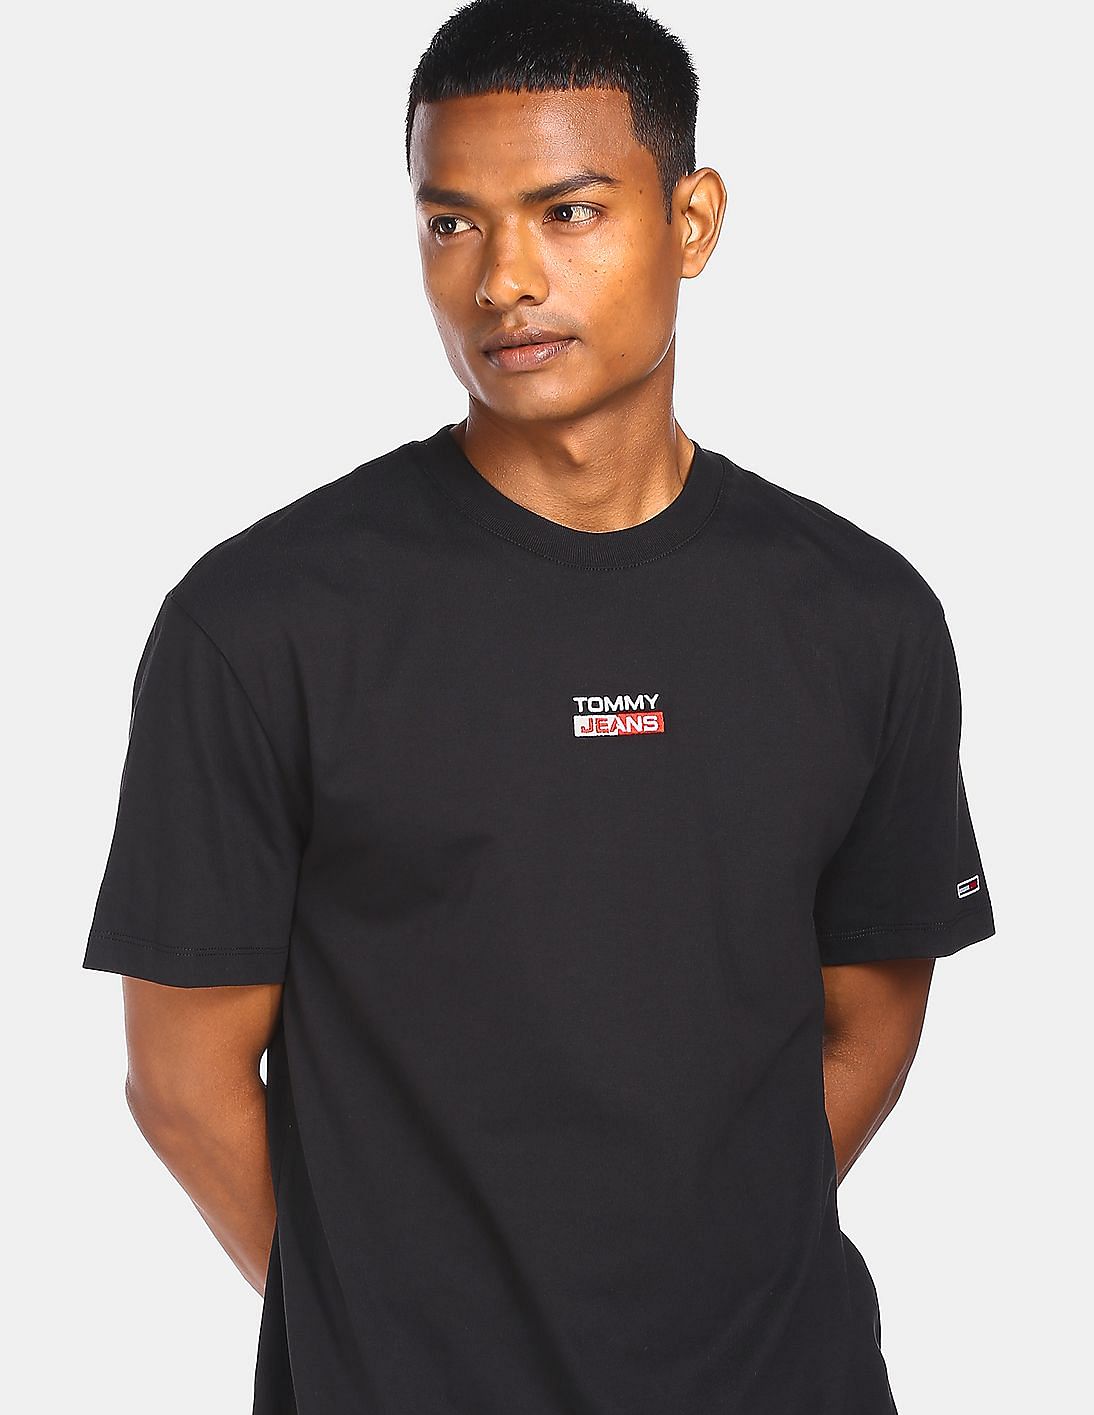 Buy Tommy Hilfiger Men Black Cotton Embroidered Logo T-Shirt - NNNOW.com